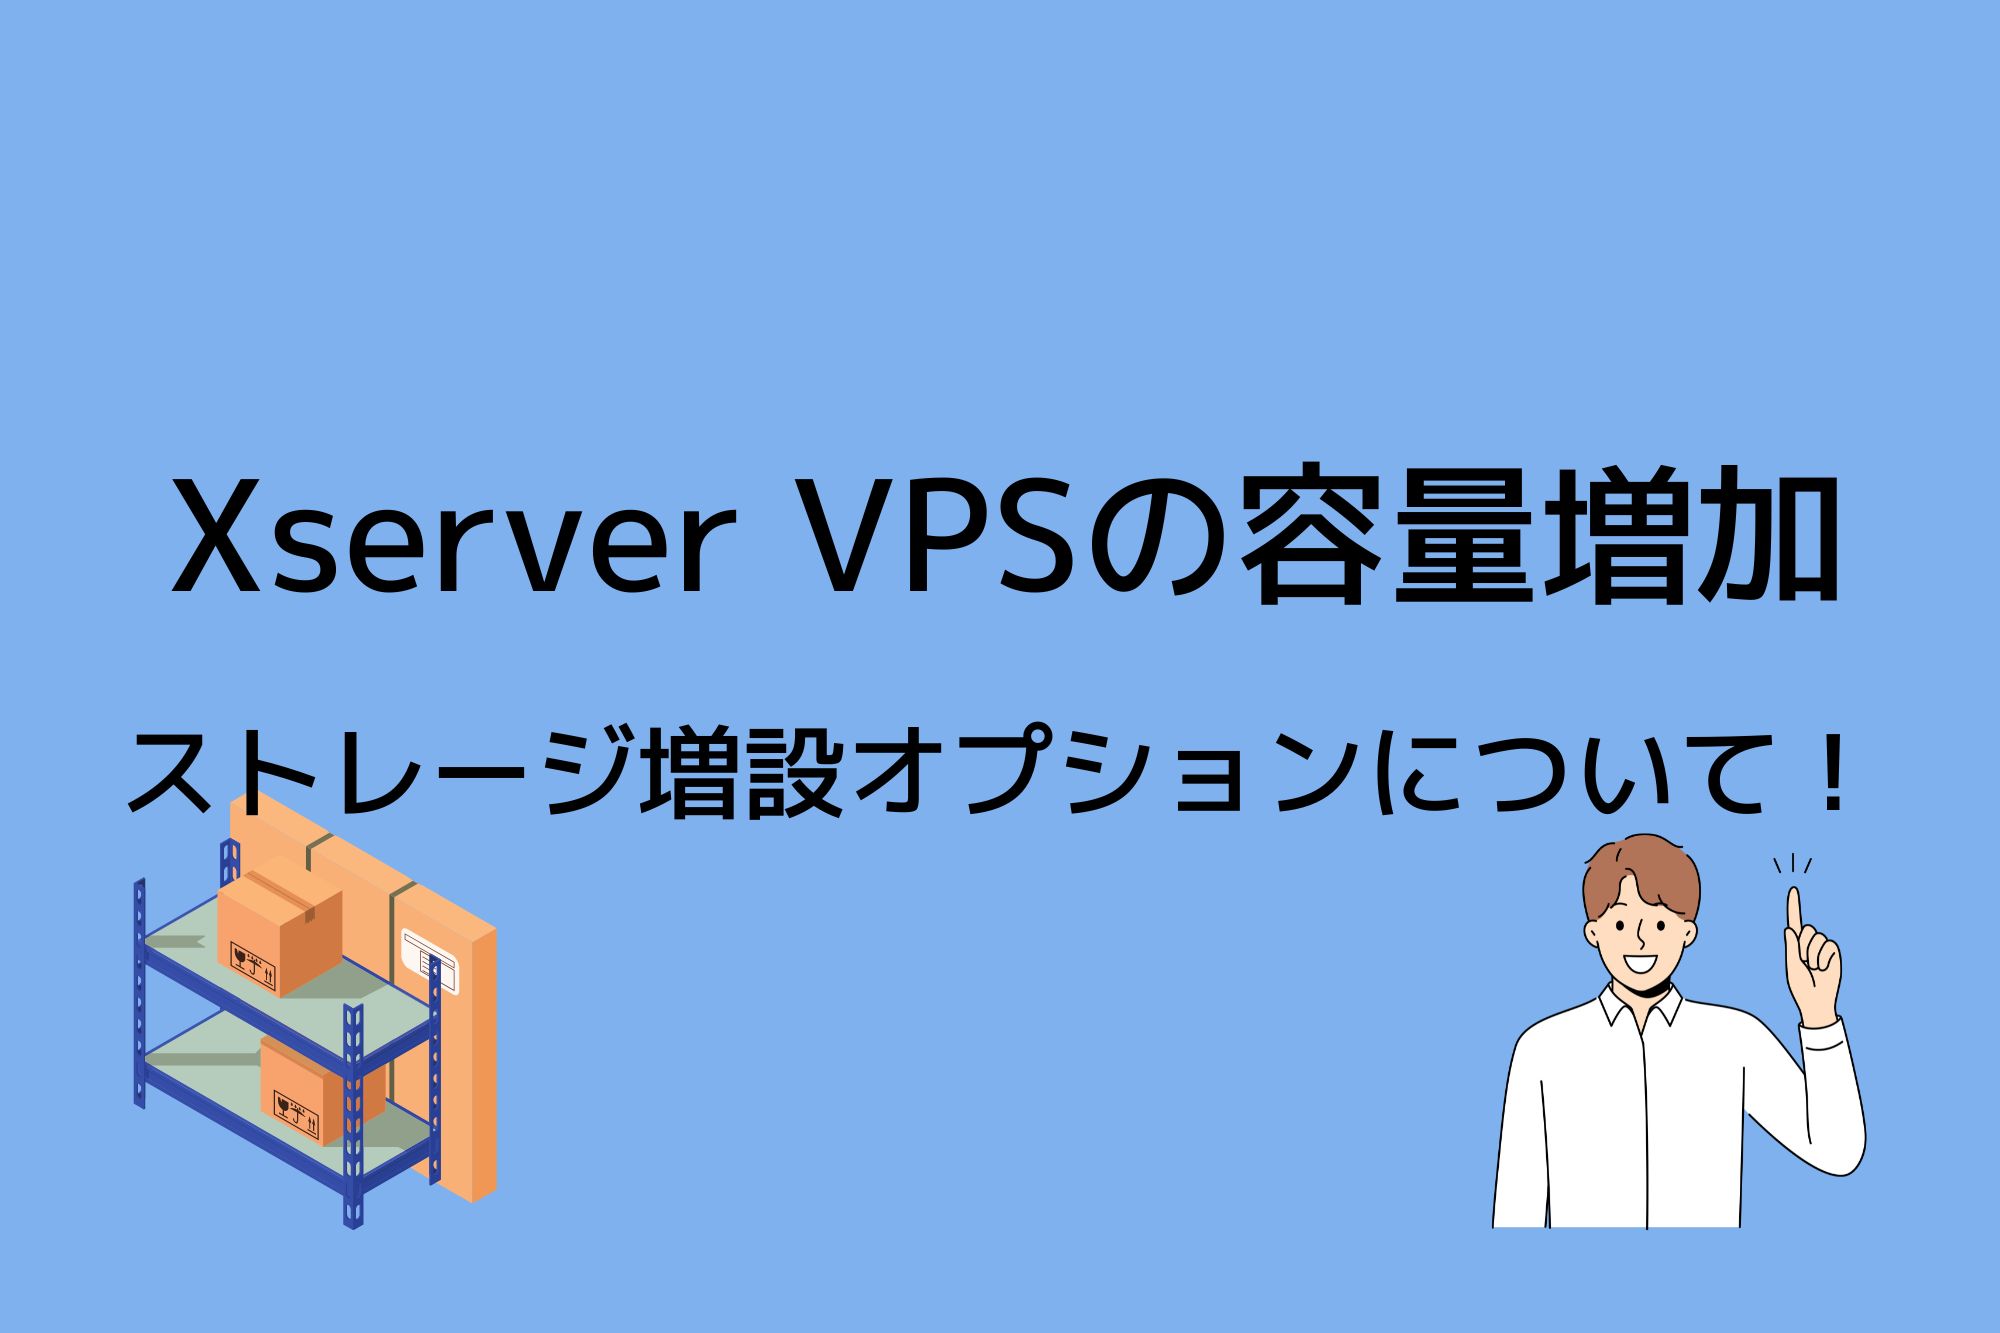 Xserver VPSはストレージ容量の追加も可能【増設オプション】